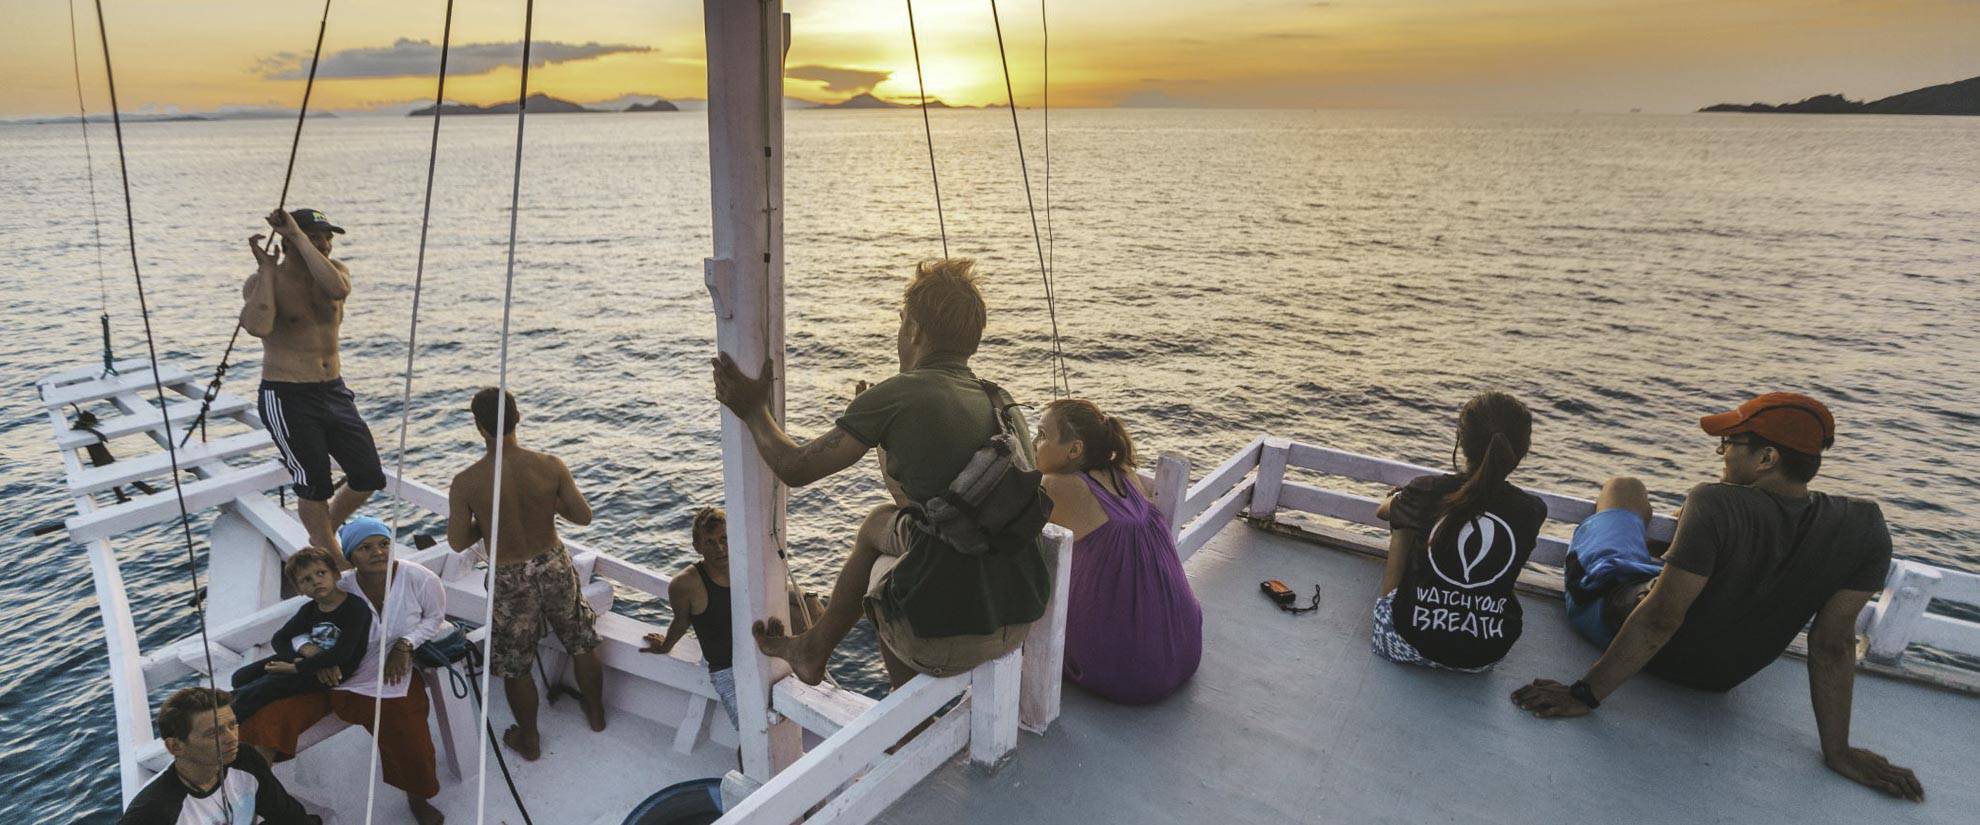 Freedive Trips around Indonesia | Freediving School in Bali Indonesia